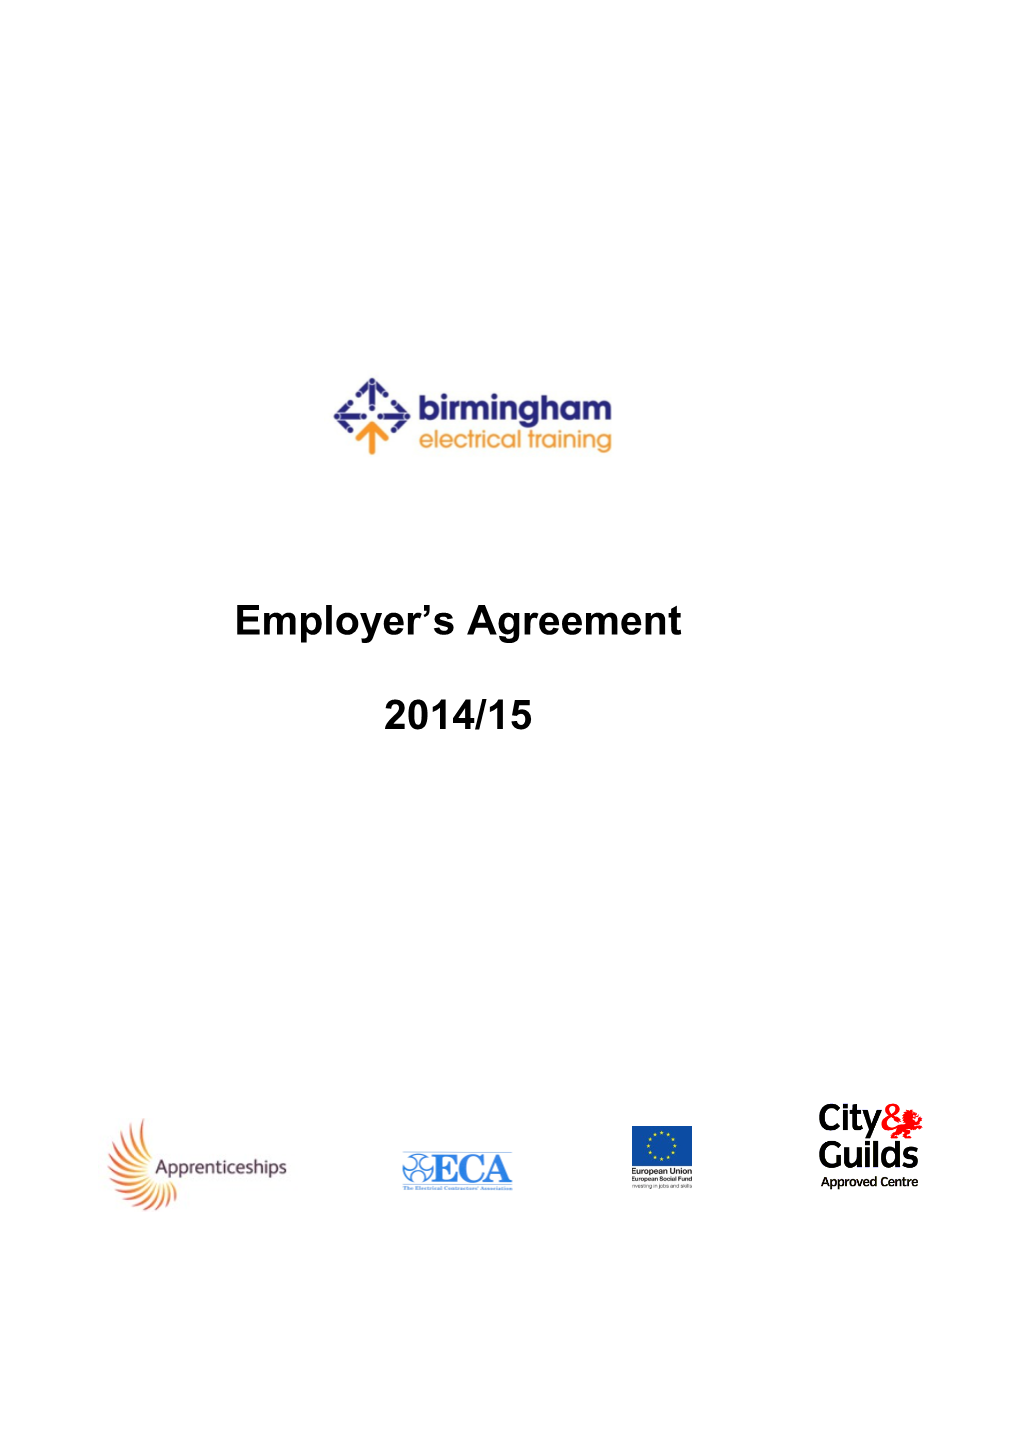 Agreement Between Birmingham Electrical Training Ltd